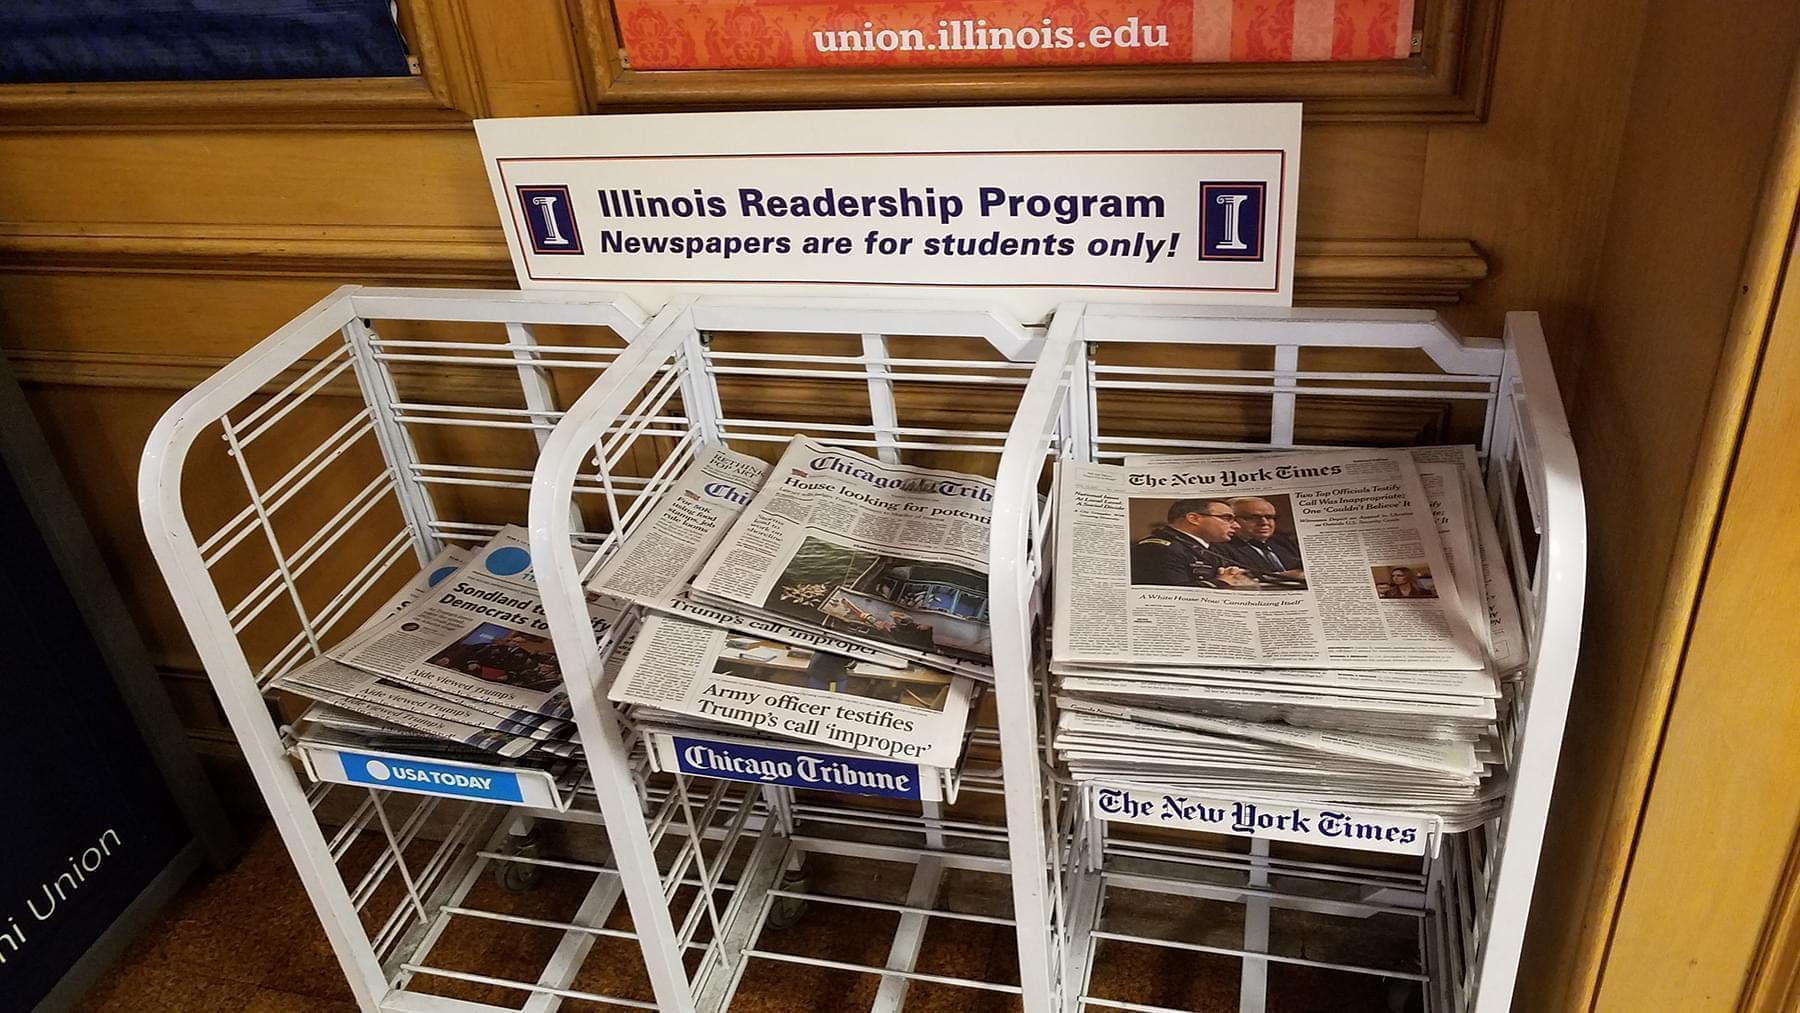 A newspaper rack for the Illinois Readership Program at the University of Illinois Illini Union.